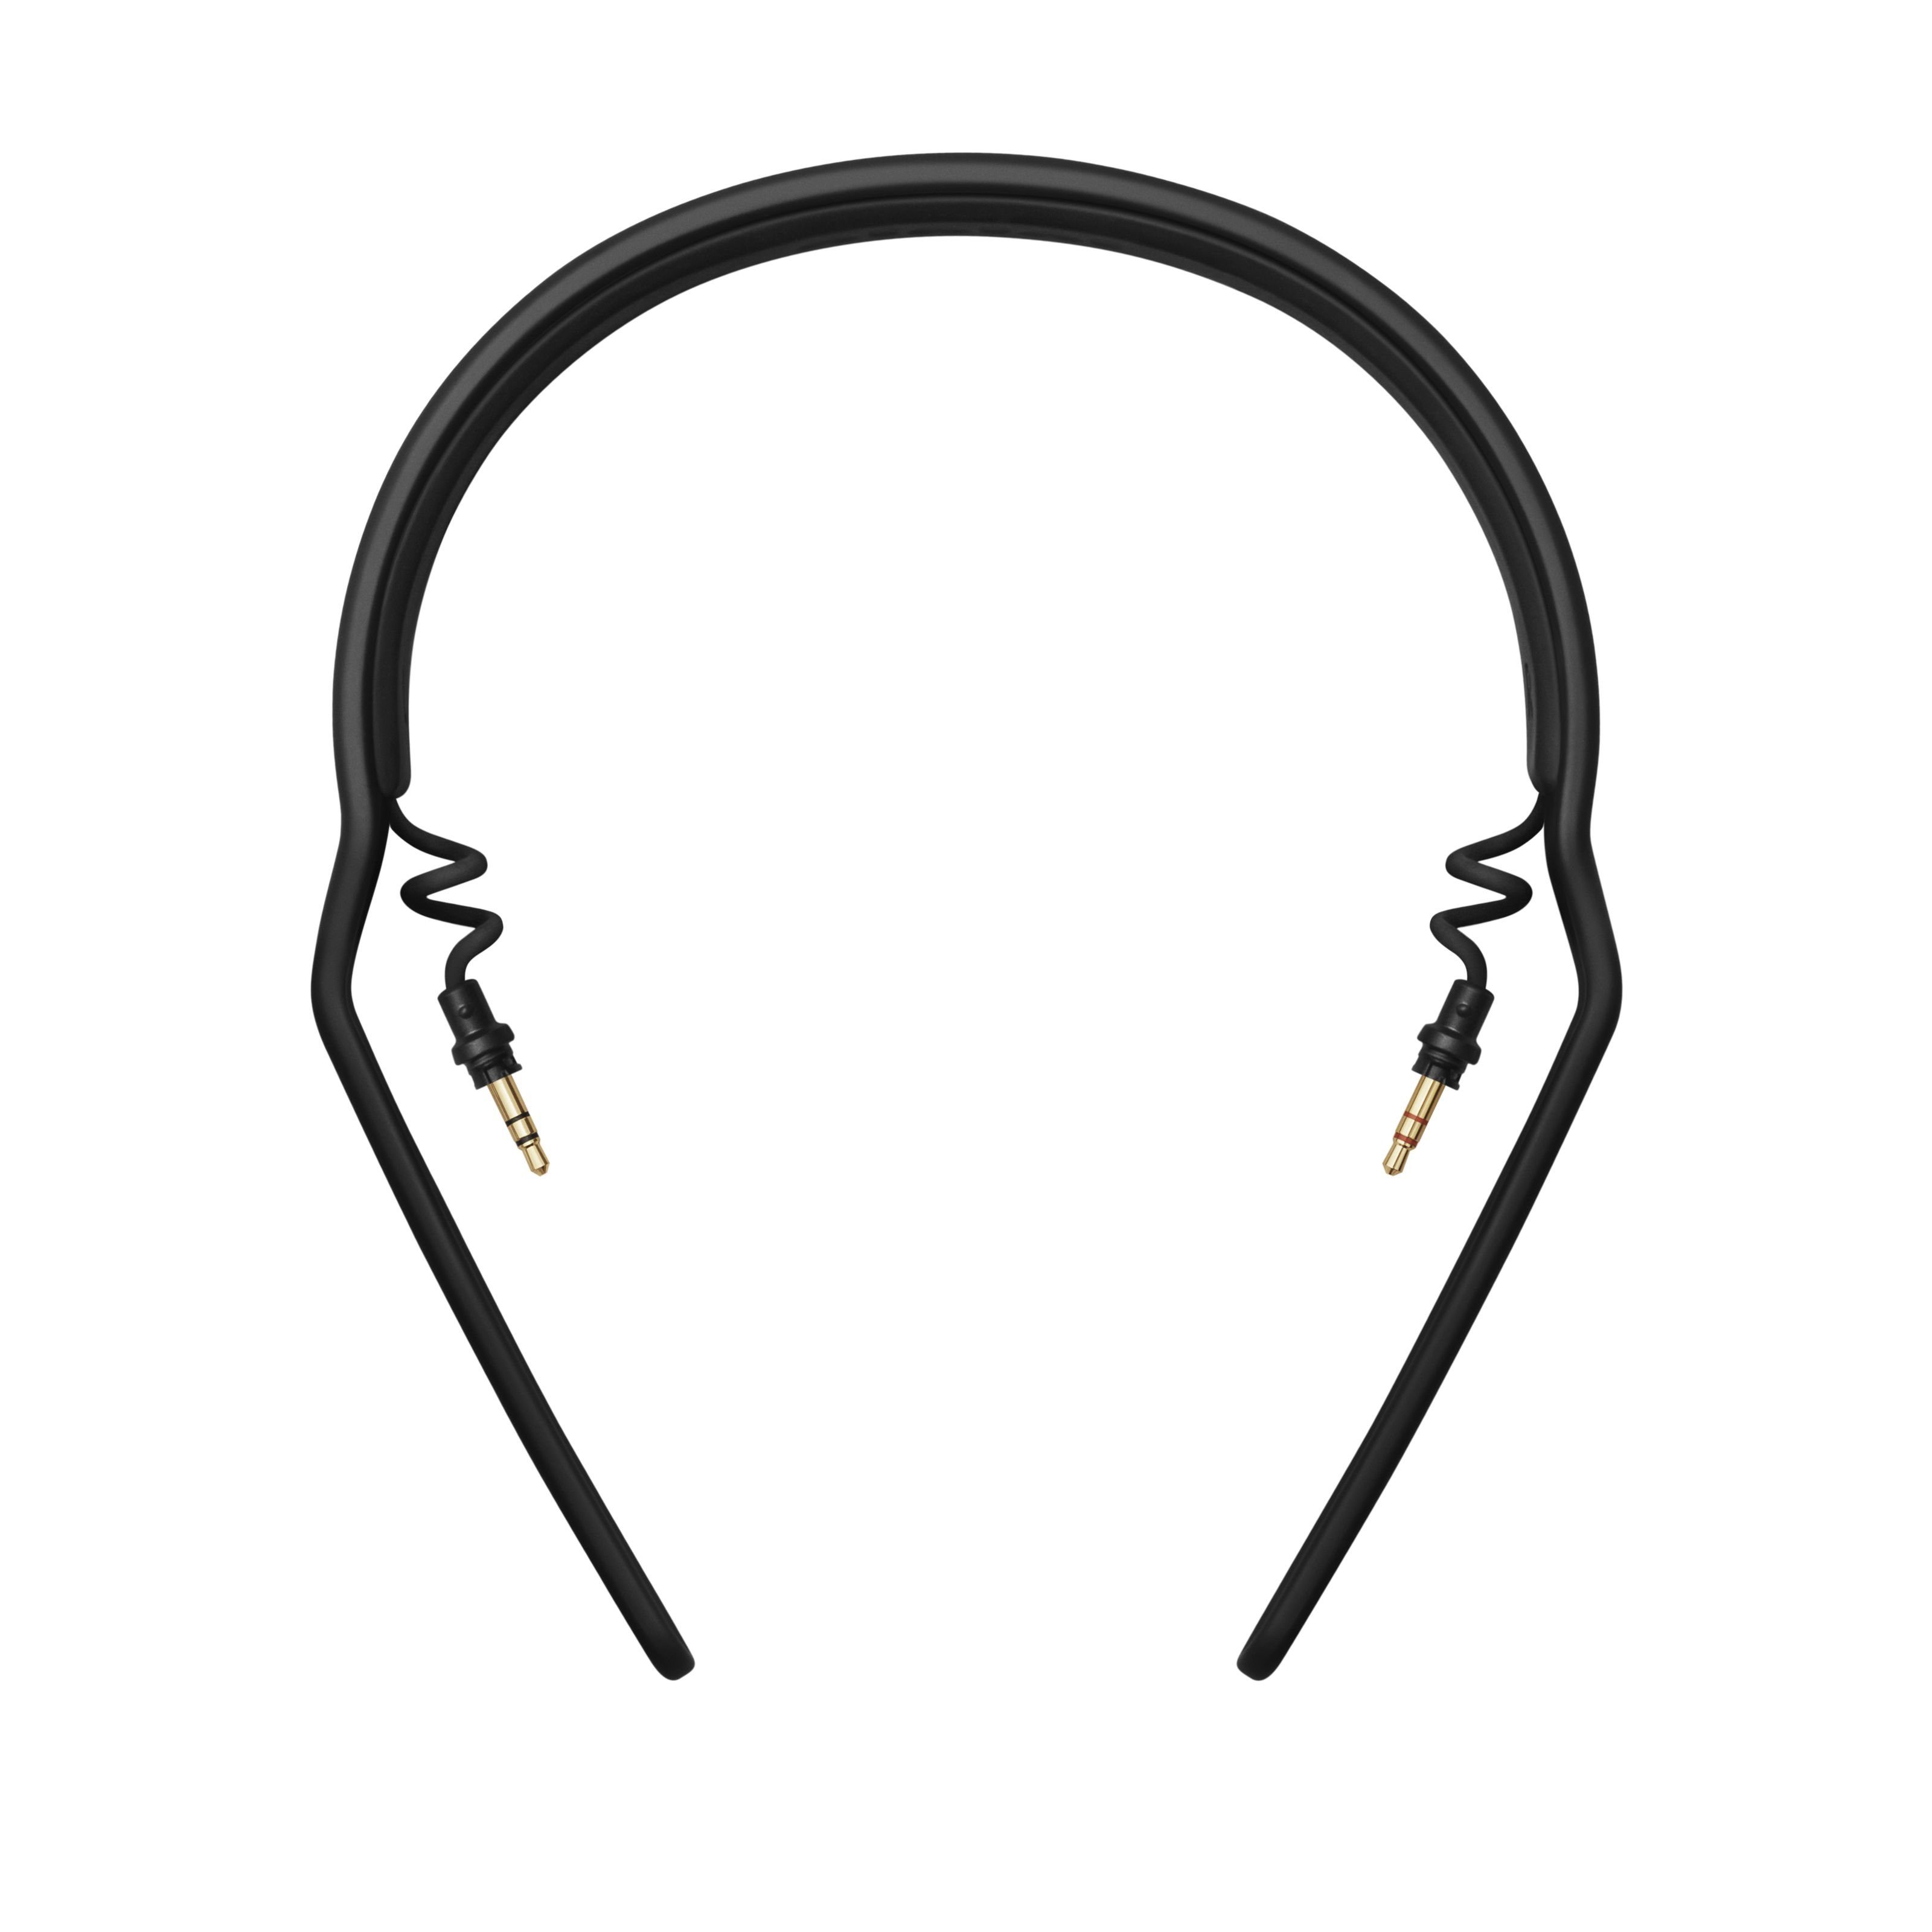 AIAIAI (H02 padding - DJ-Kopfhörer Headband for Nylon TMA-2) silicone